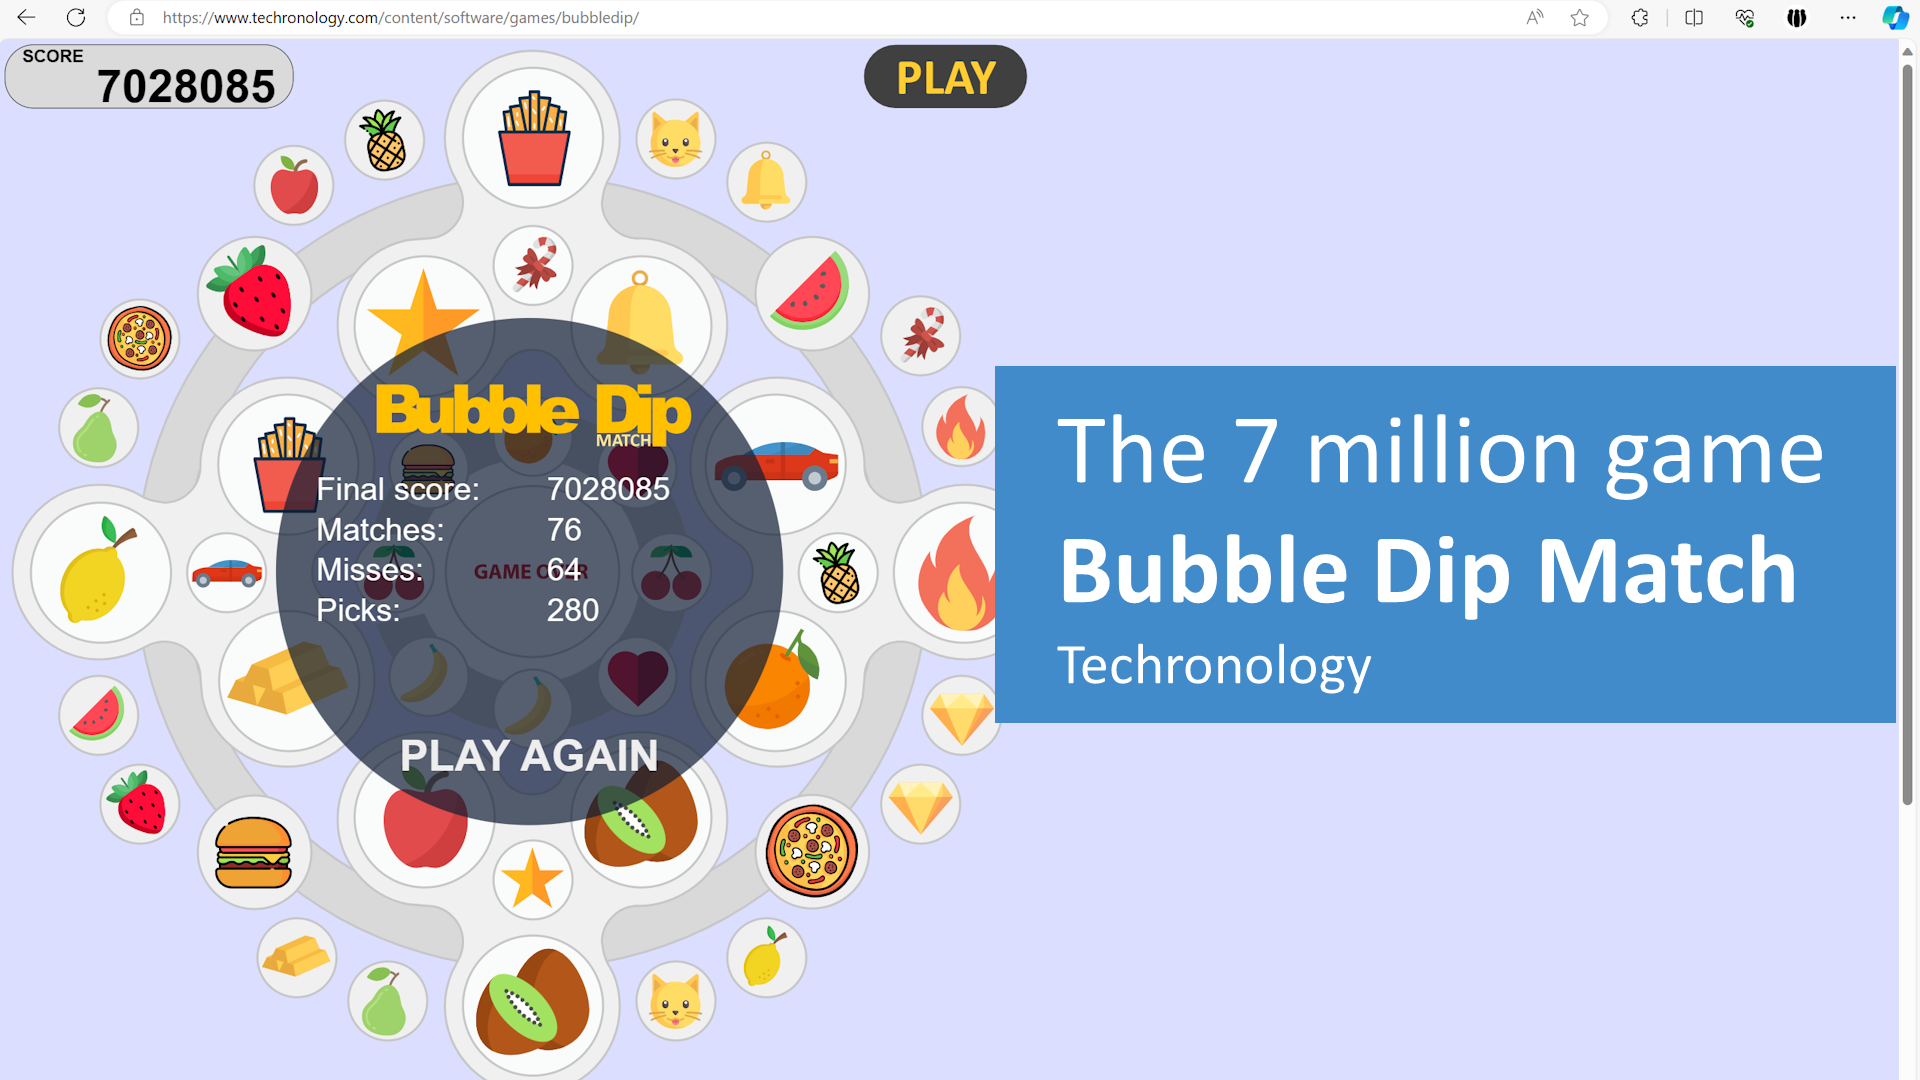 7 million game - Bubble Dip Match - Techronology